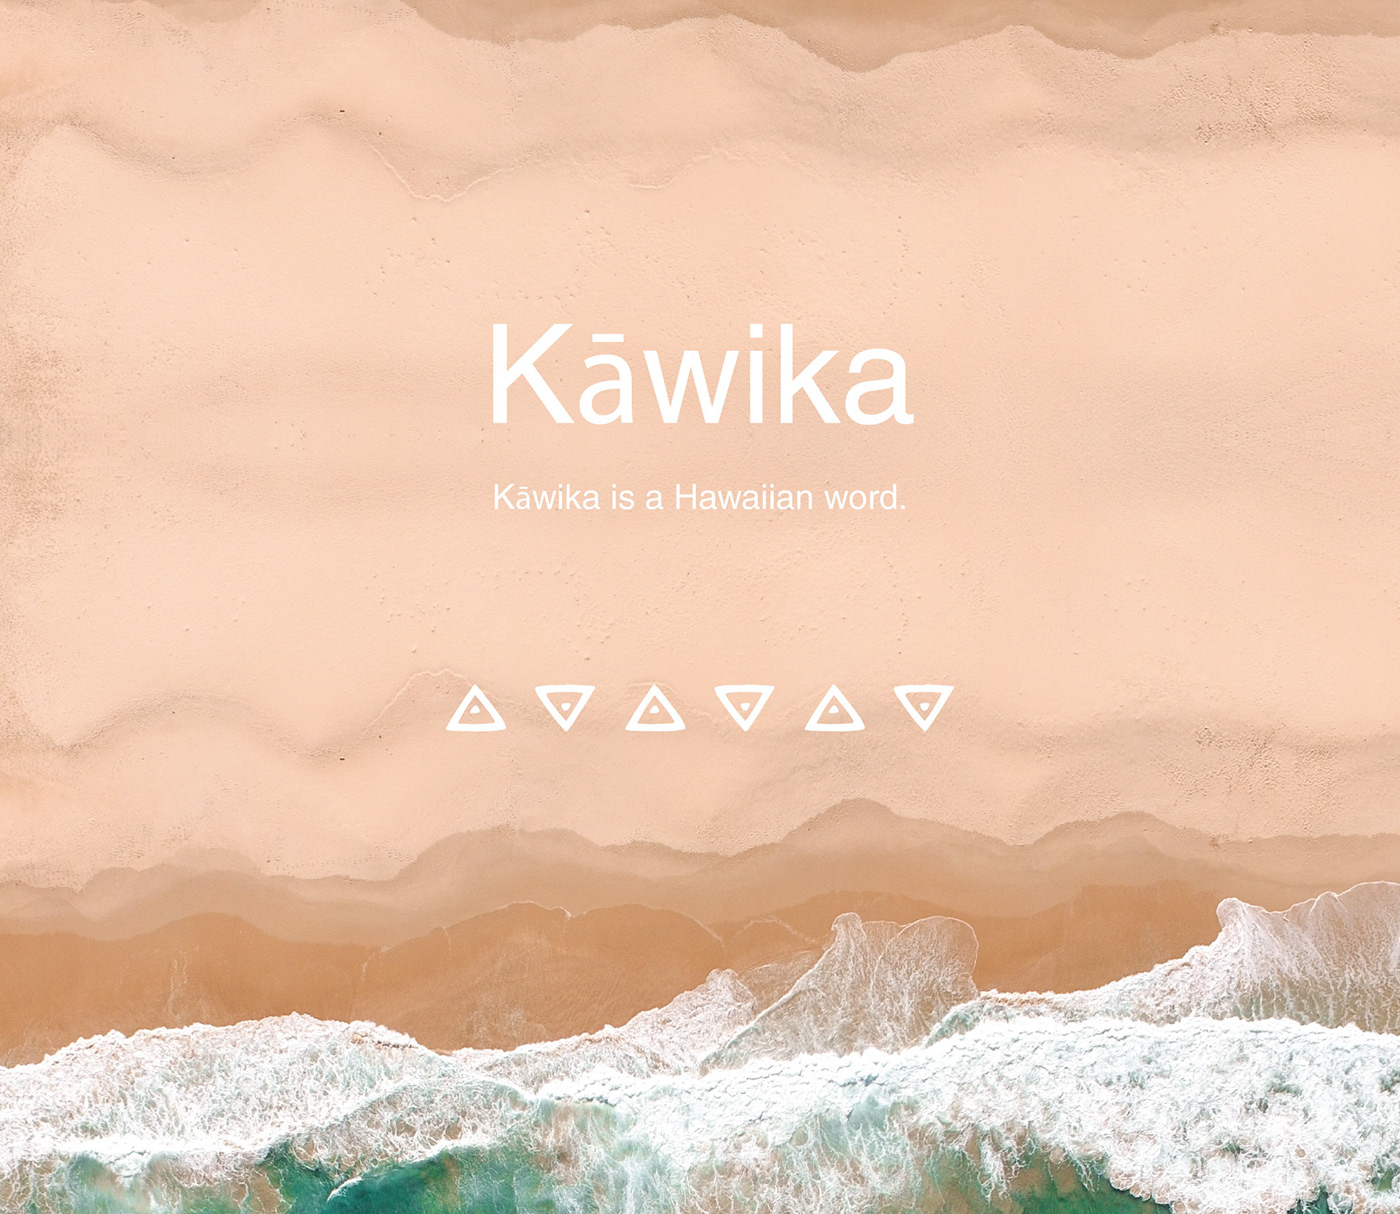 Tiki hawai hwaiian art logo beach egypt northcoast Tropical waves